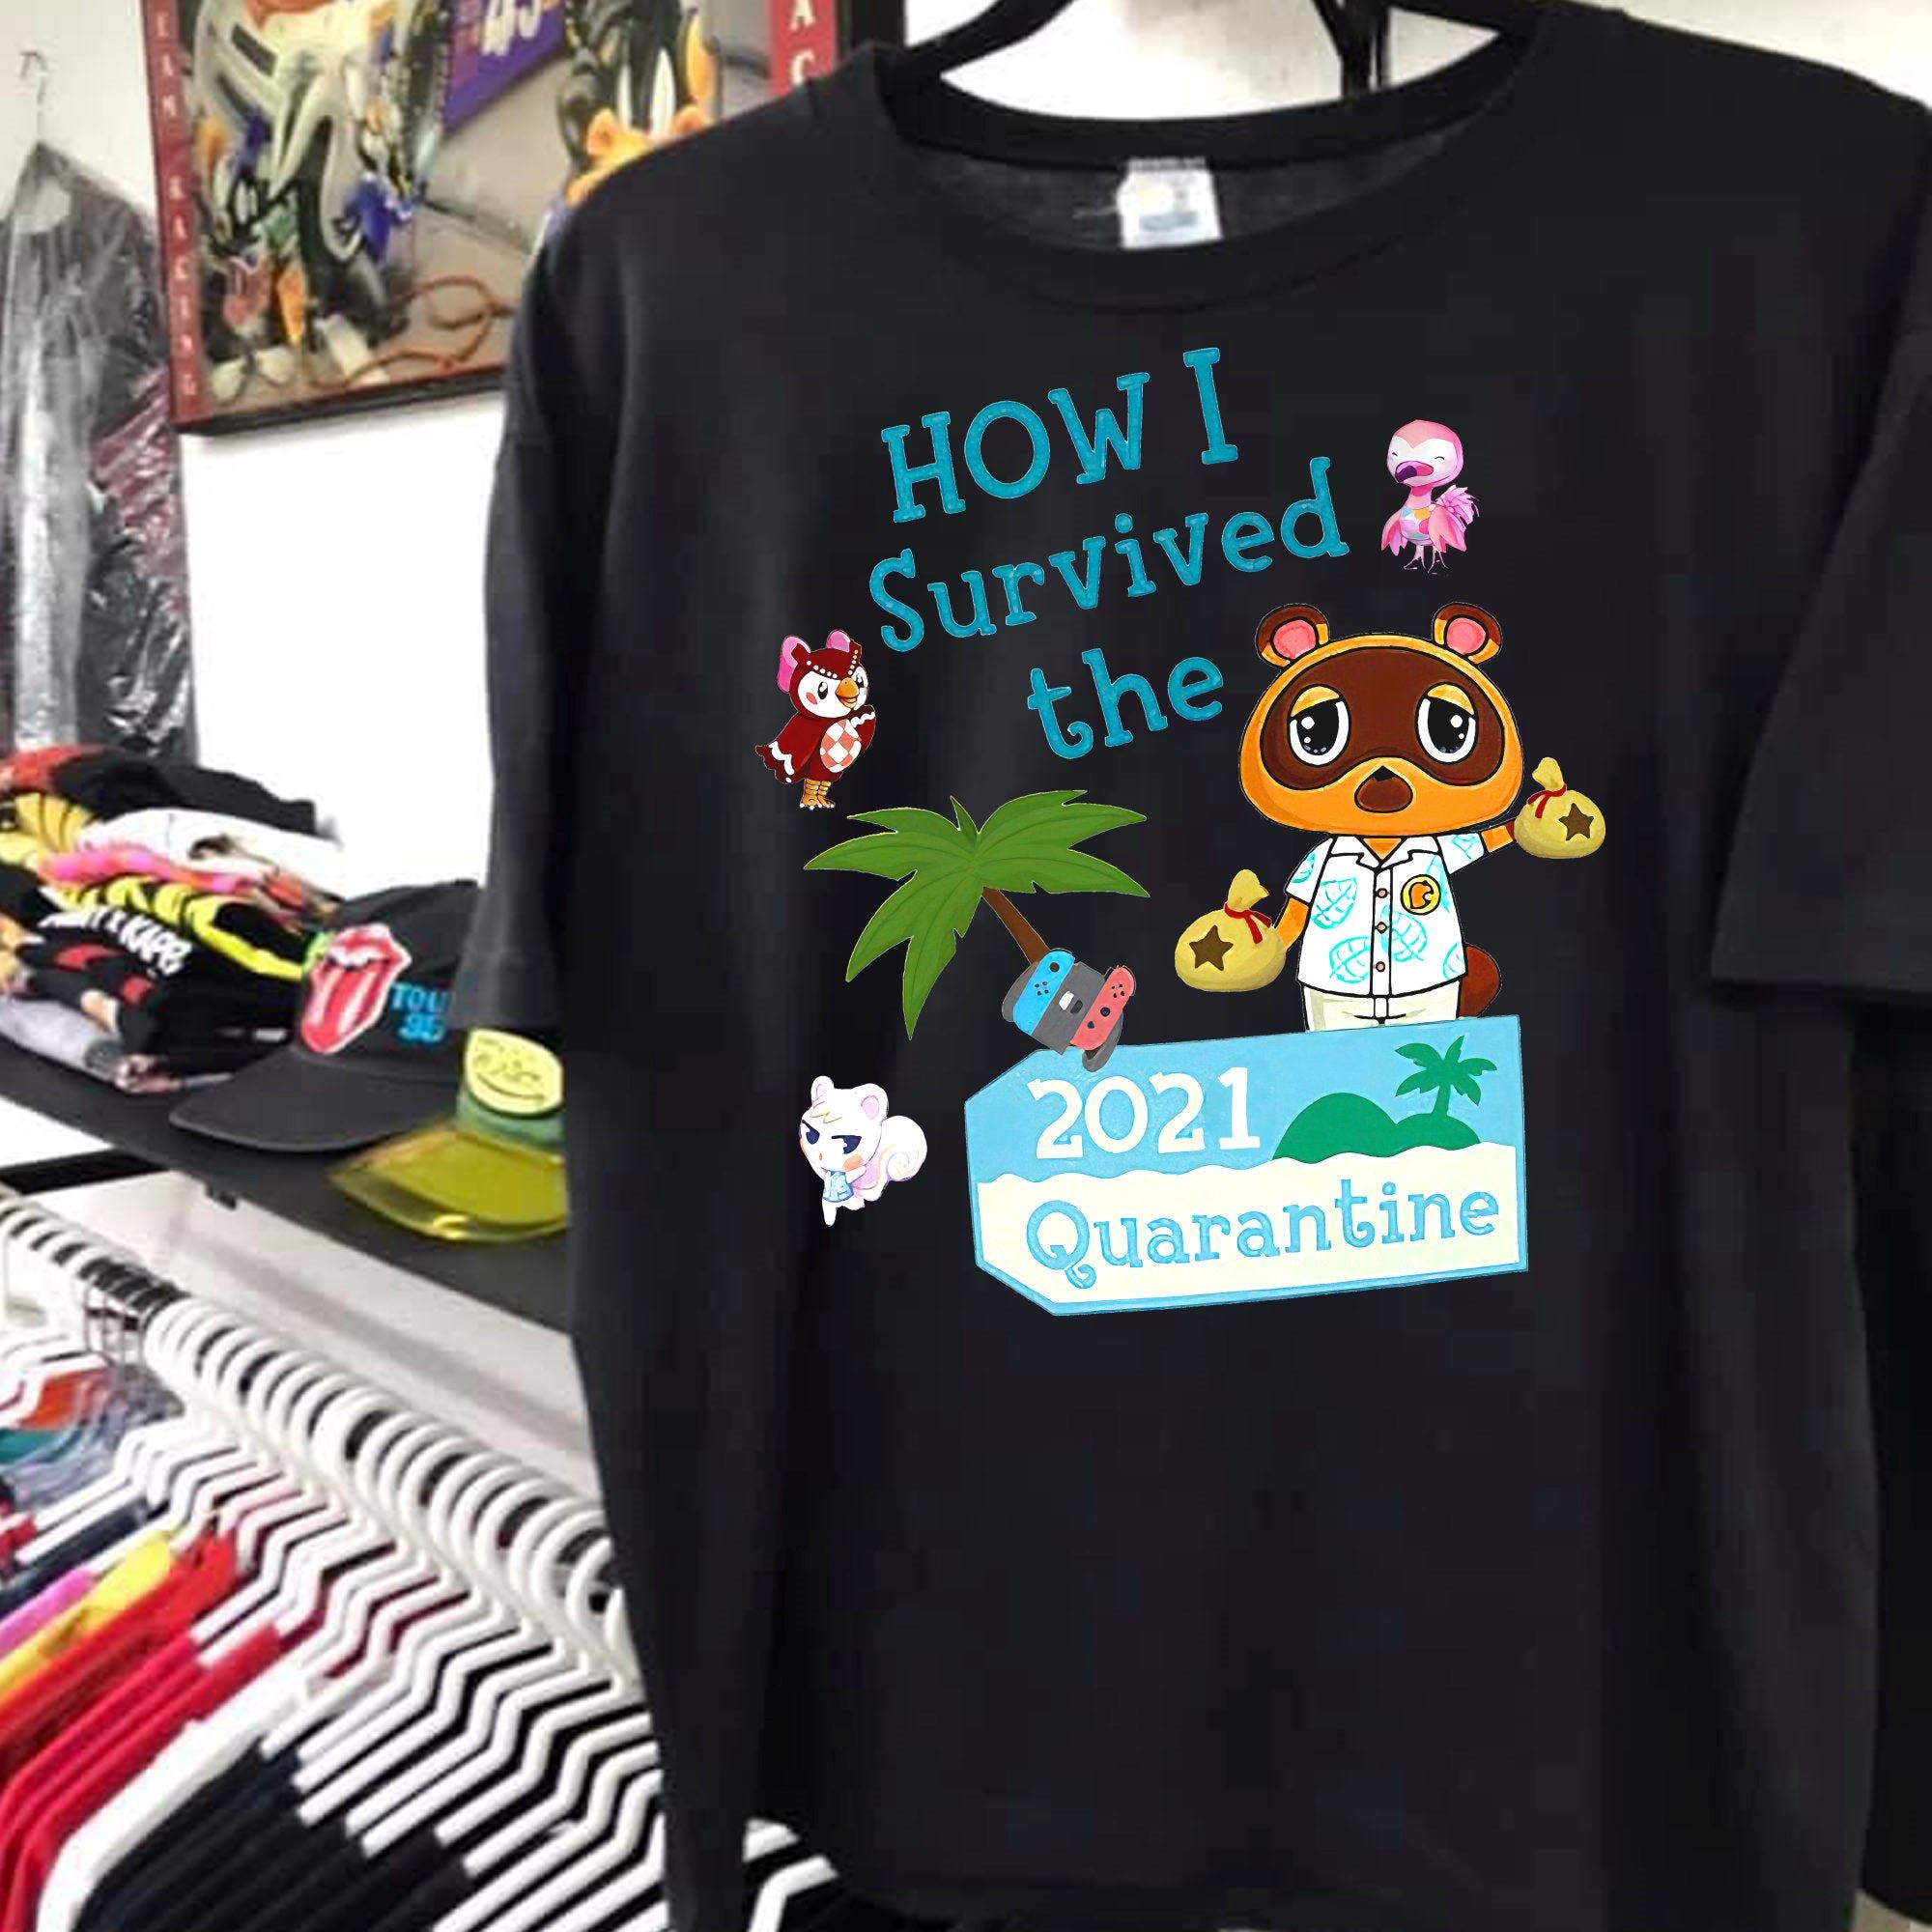 Animal Villagers Crossing Shirt - Funny How I Survived The 2021 Quarantine Shirt Print Art Shirt Gift For Men Women Unisex T-shirt